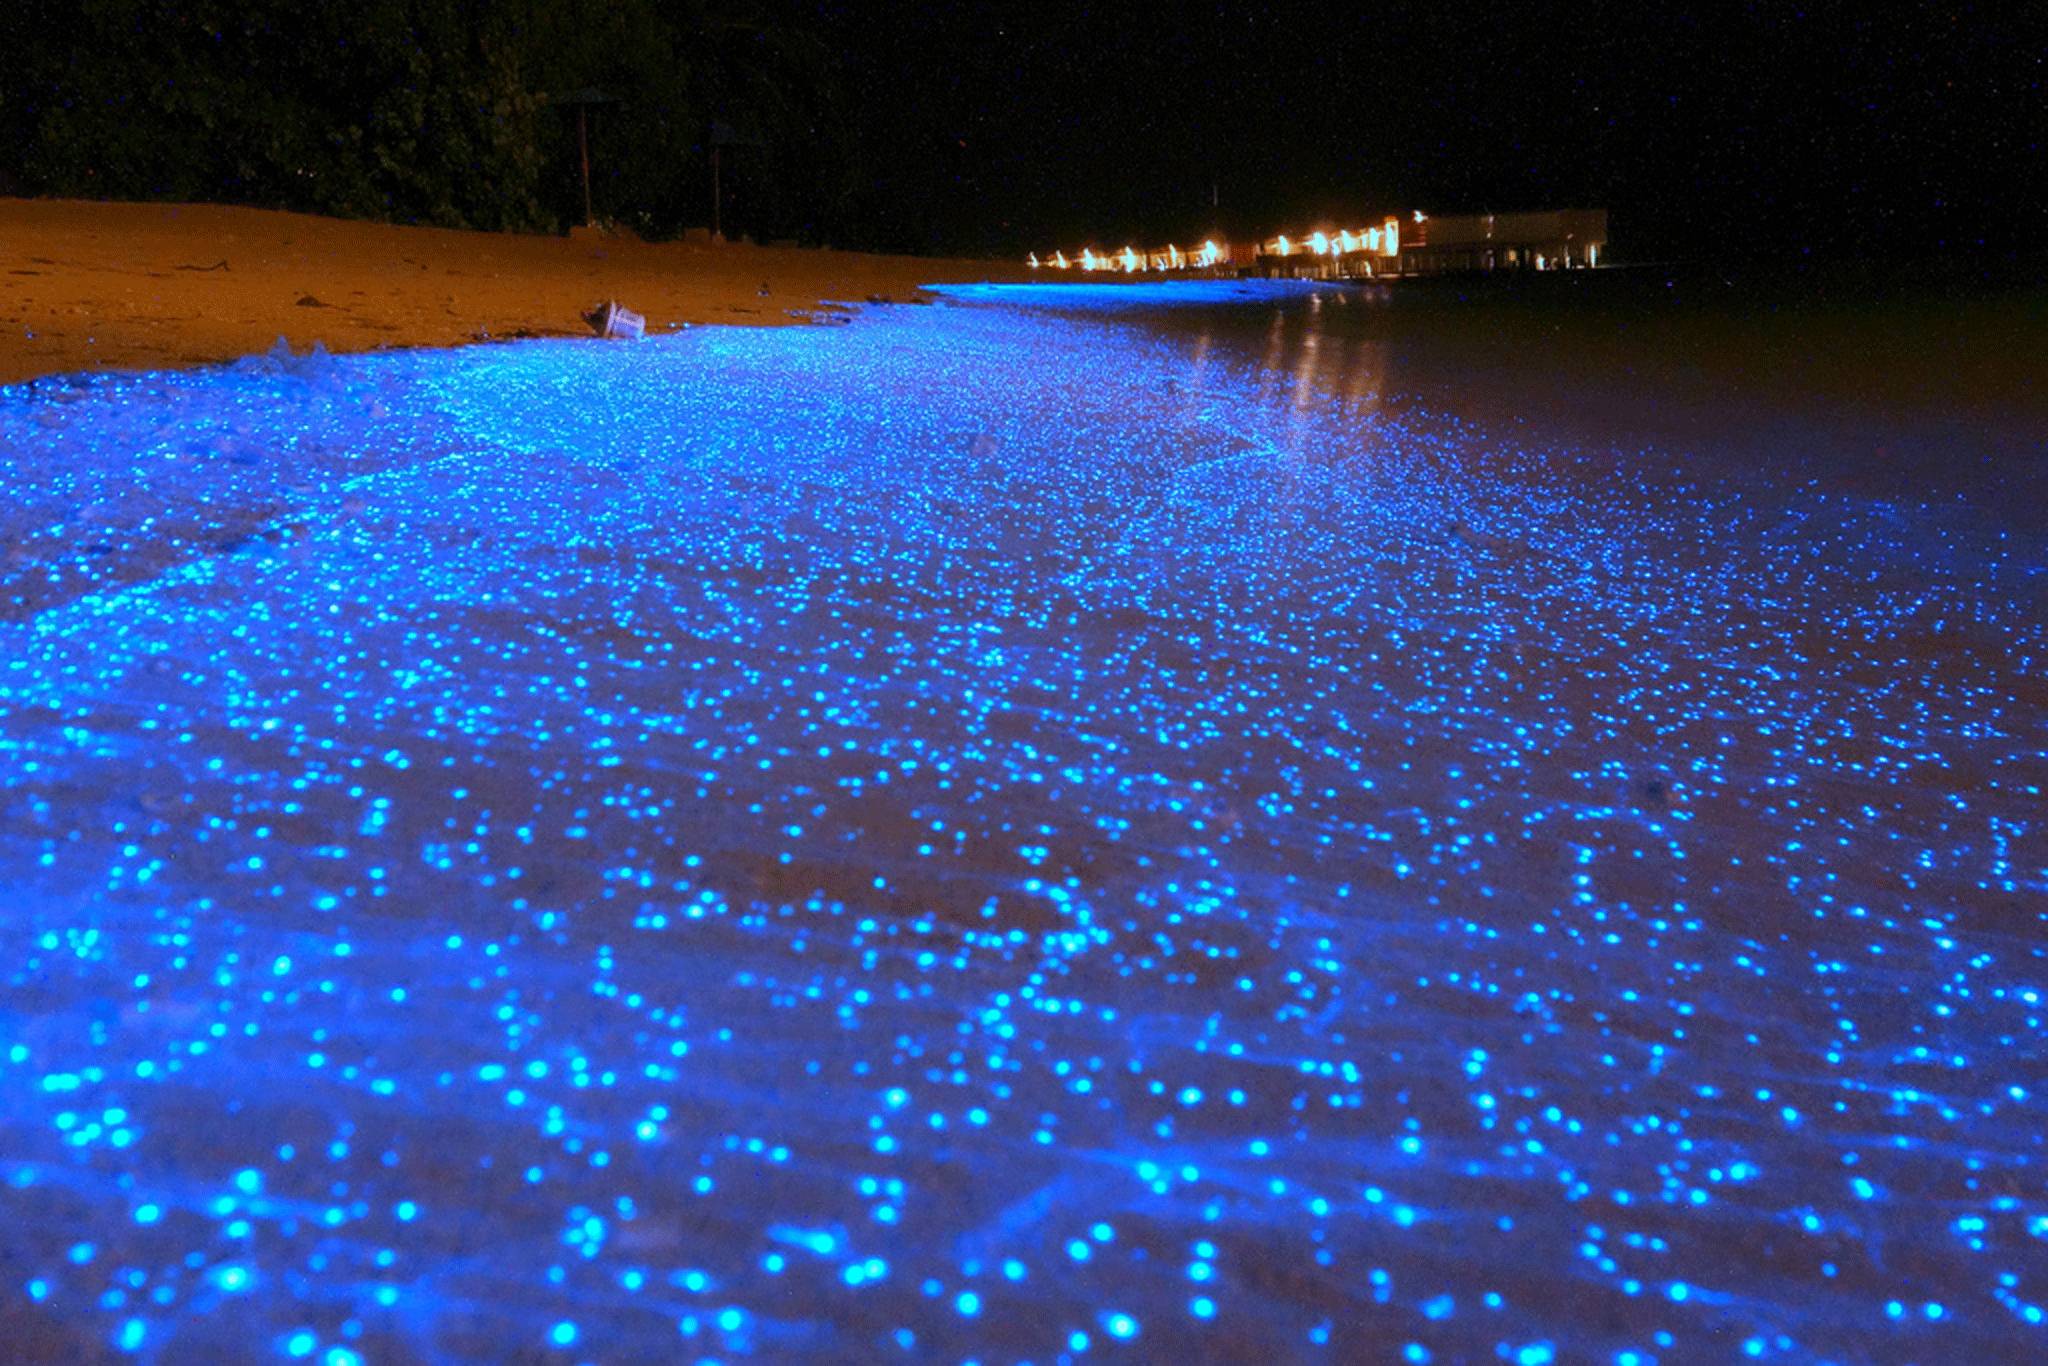 Bioluminescent phytoplankton washes up on Maldives beach